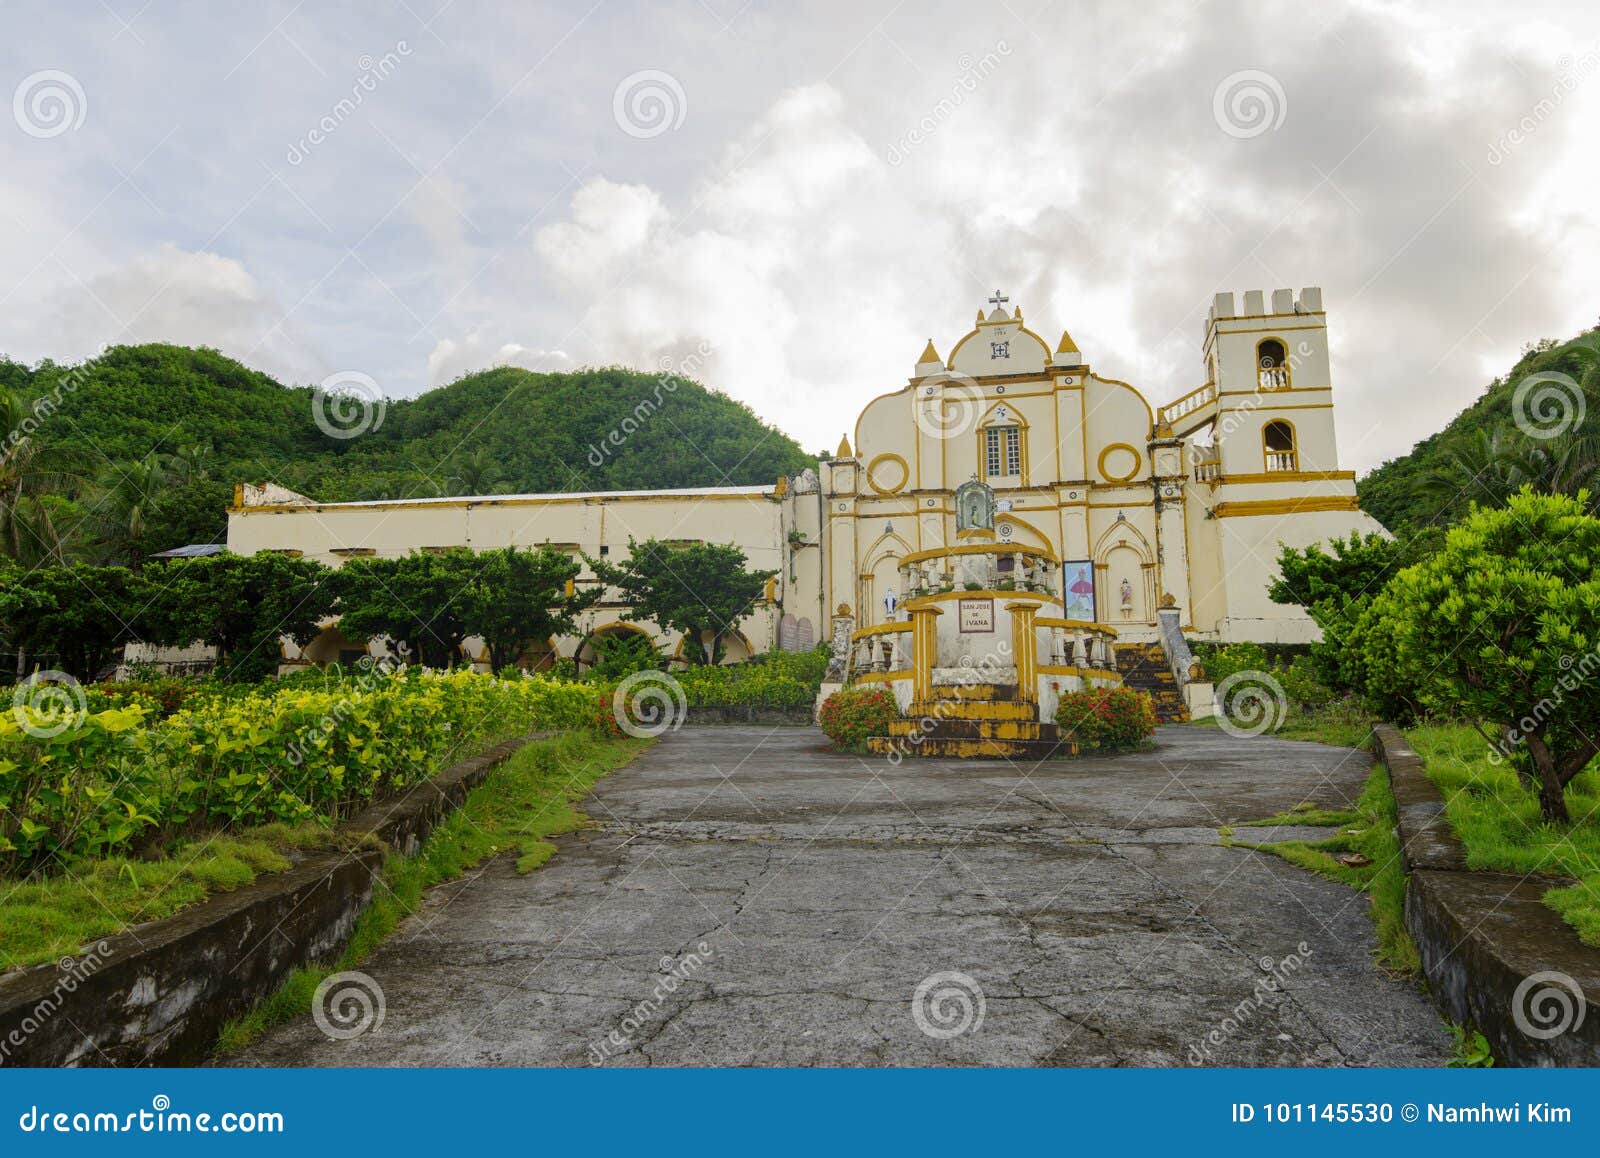 san jose de obrero church view from road, batanes